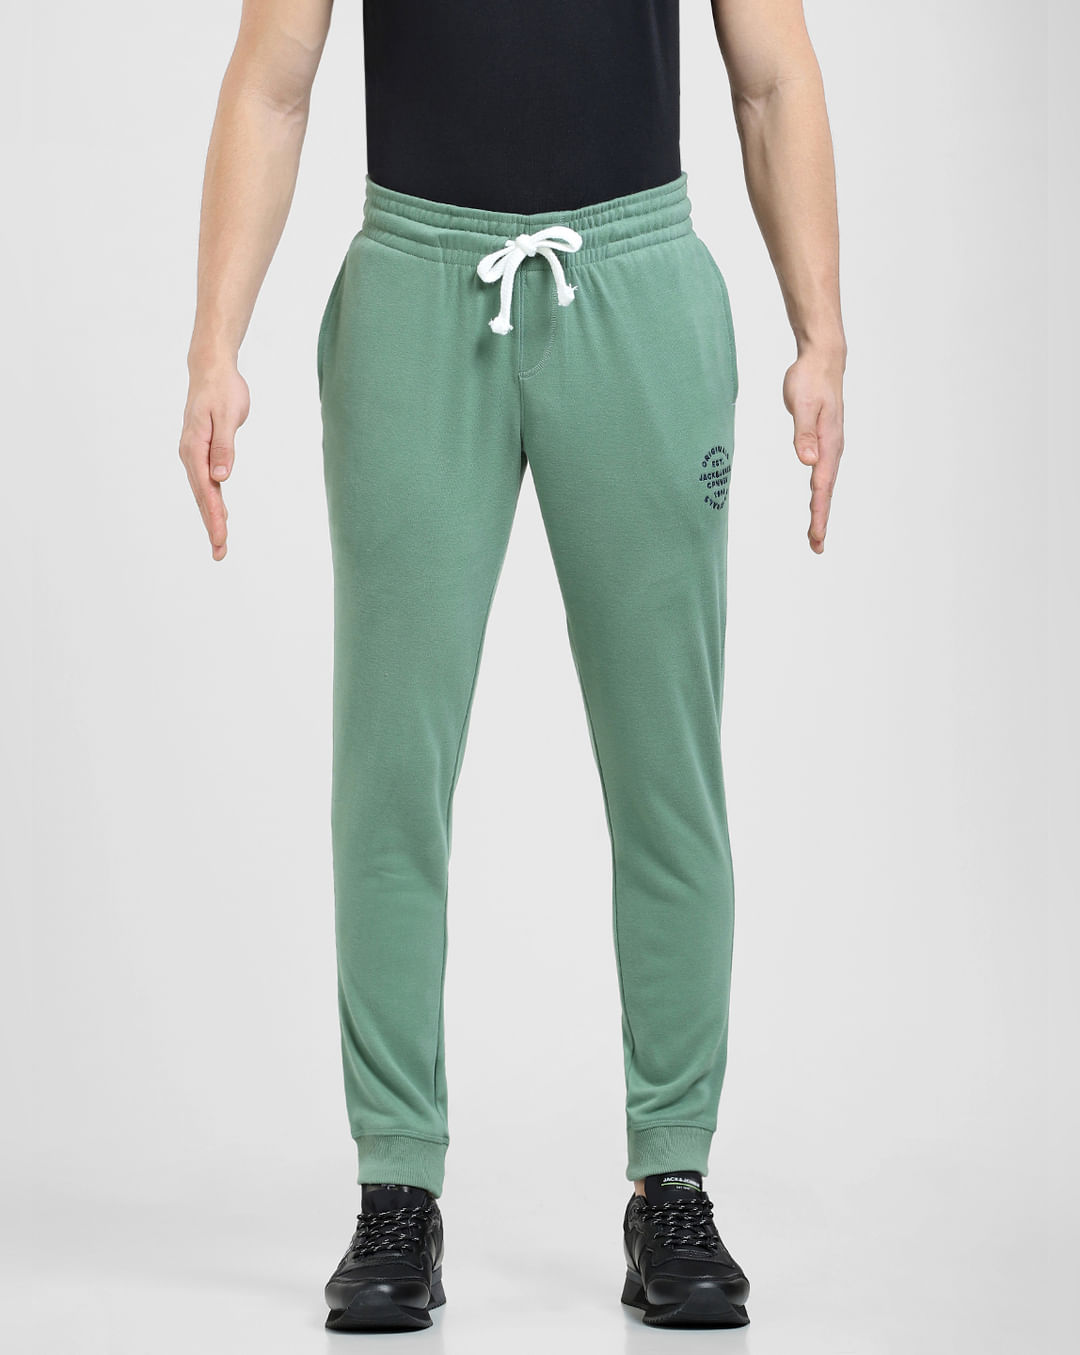 Buy Green Drawstring Sweatpants for Men